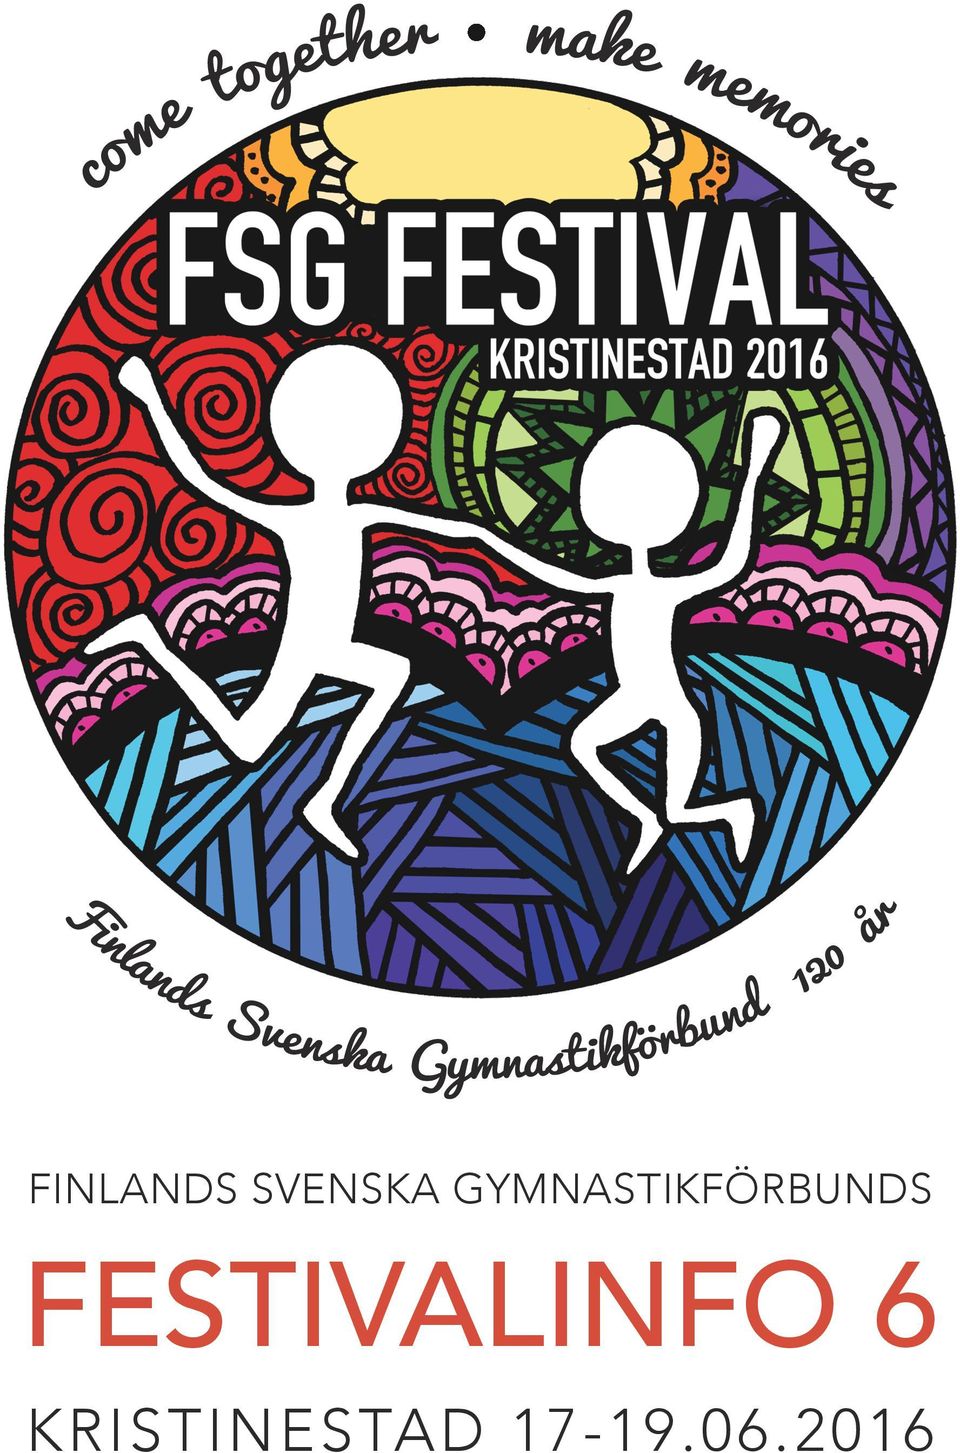 g to FINLANDS SVENSKA GYMNASTIKFÖRBUNDS